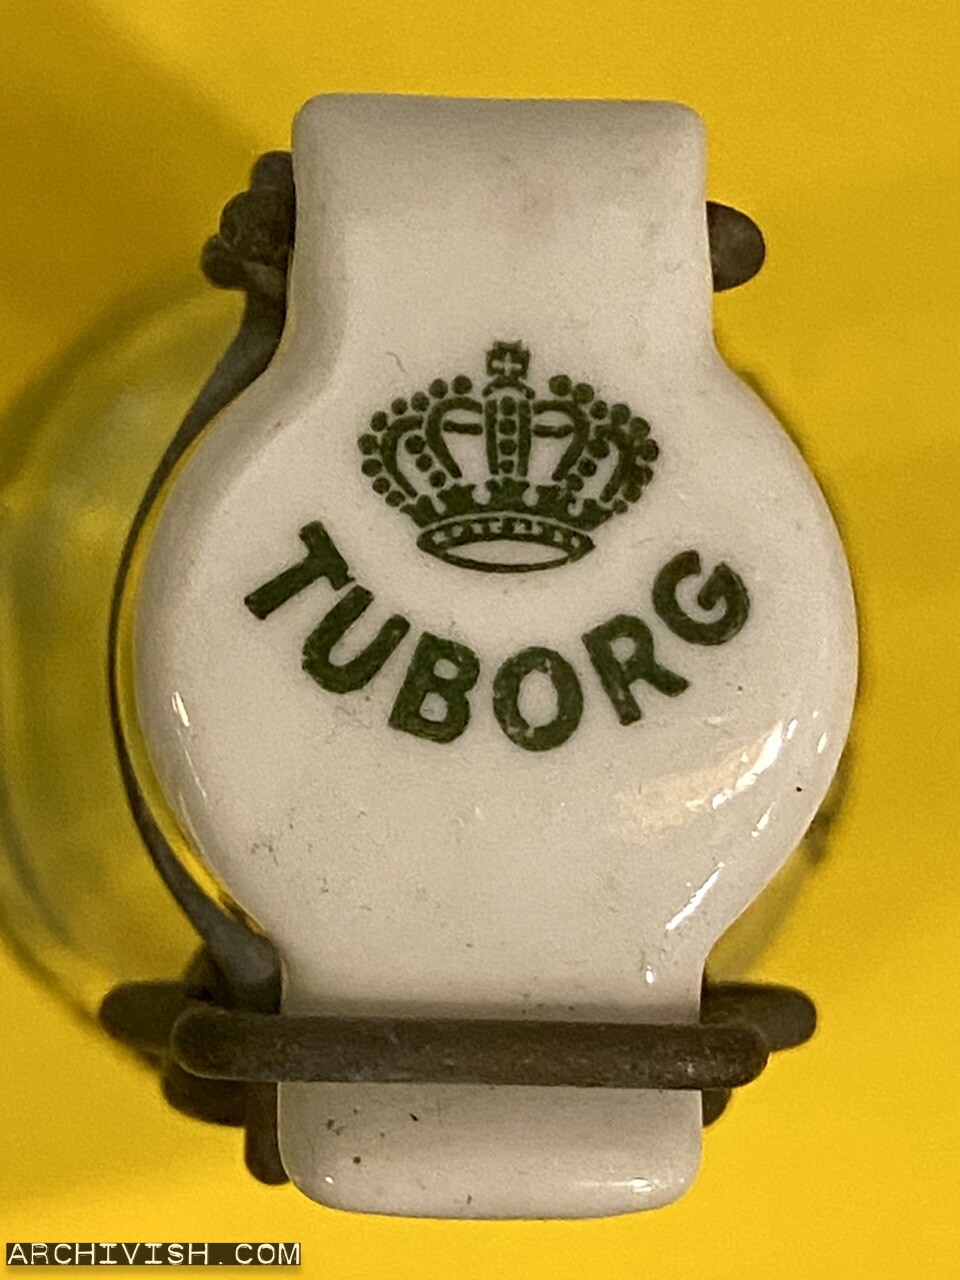 Tuborg sodabottle with porcelain cap